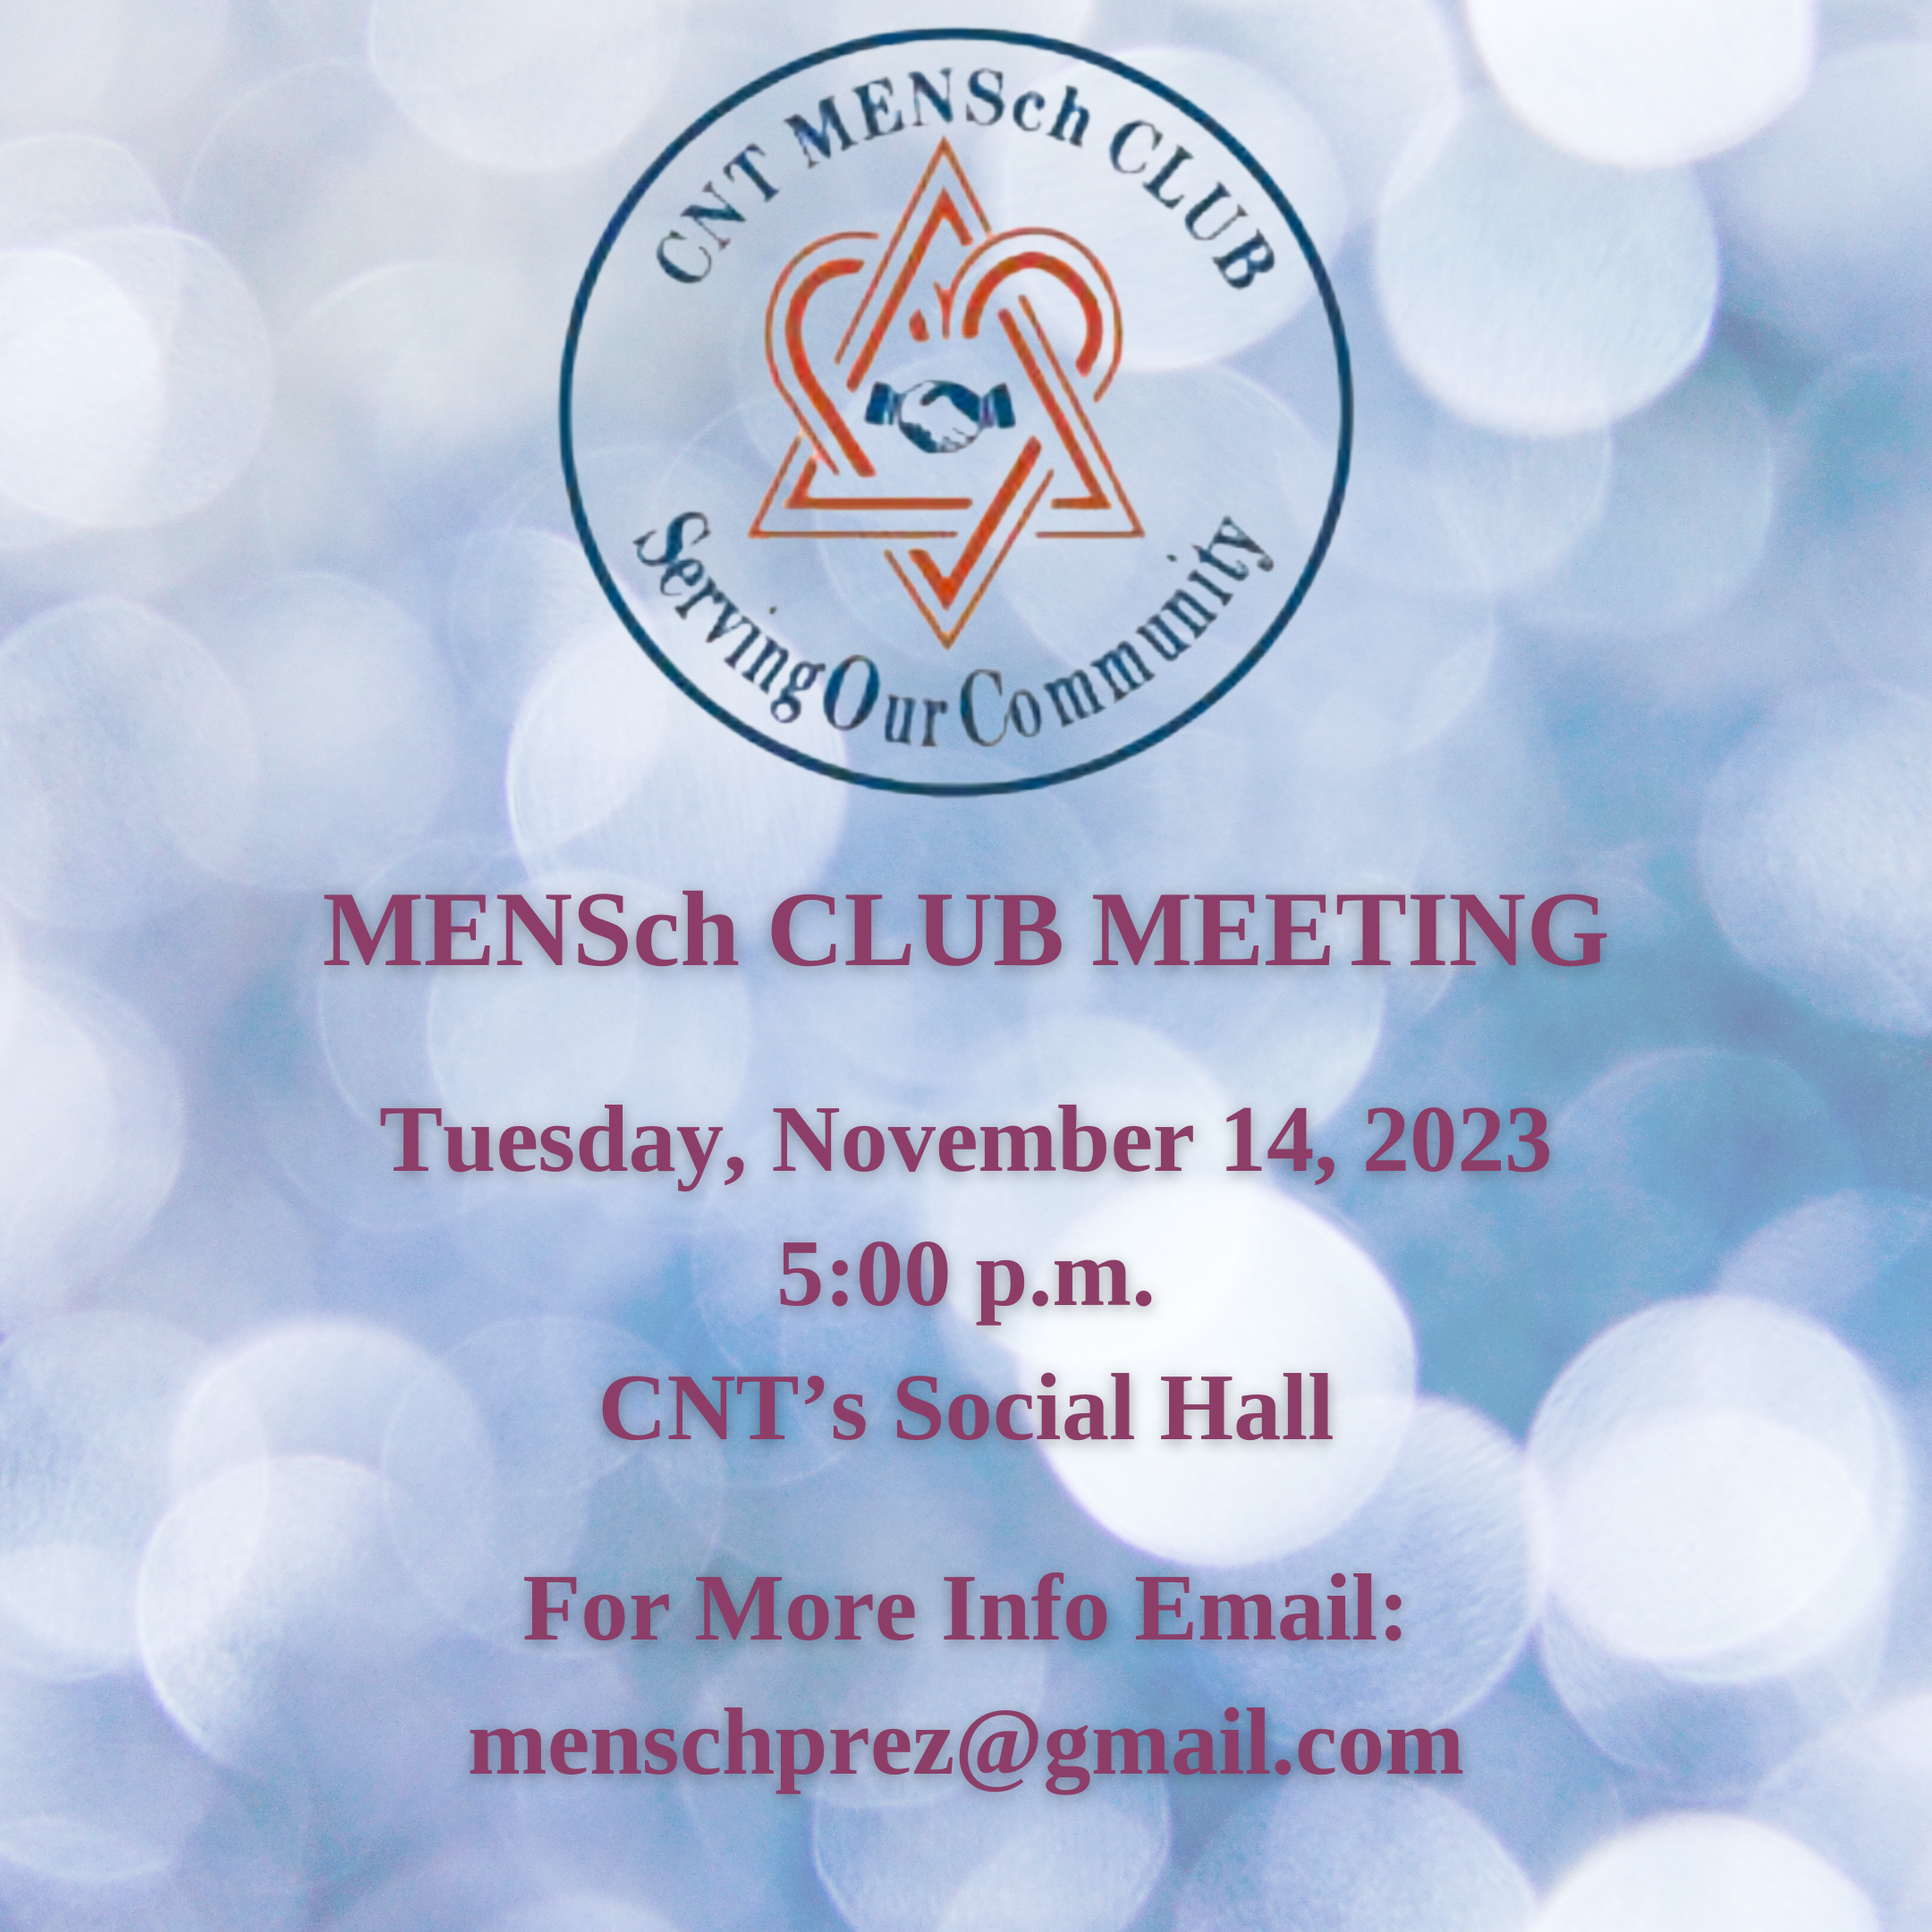 MENSCH CLUB MEETING